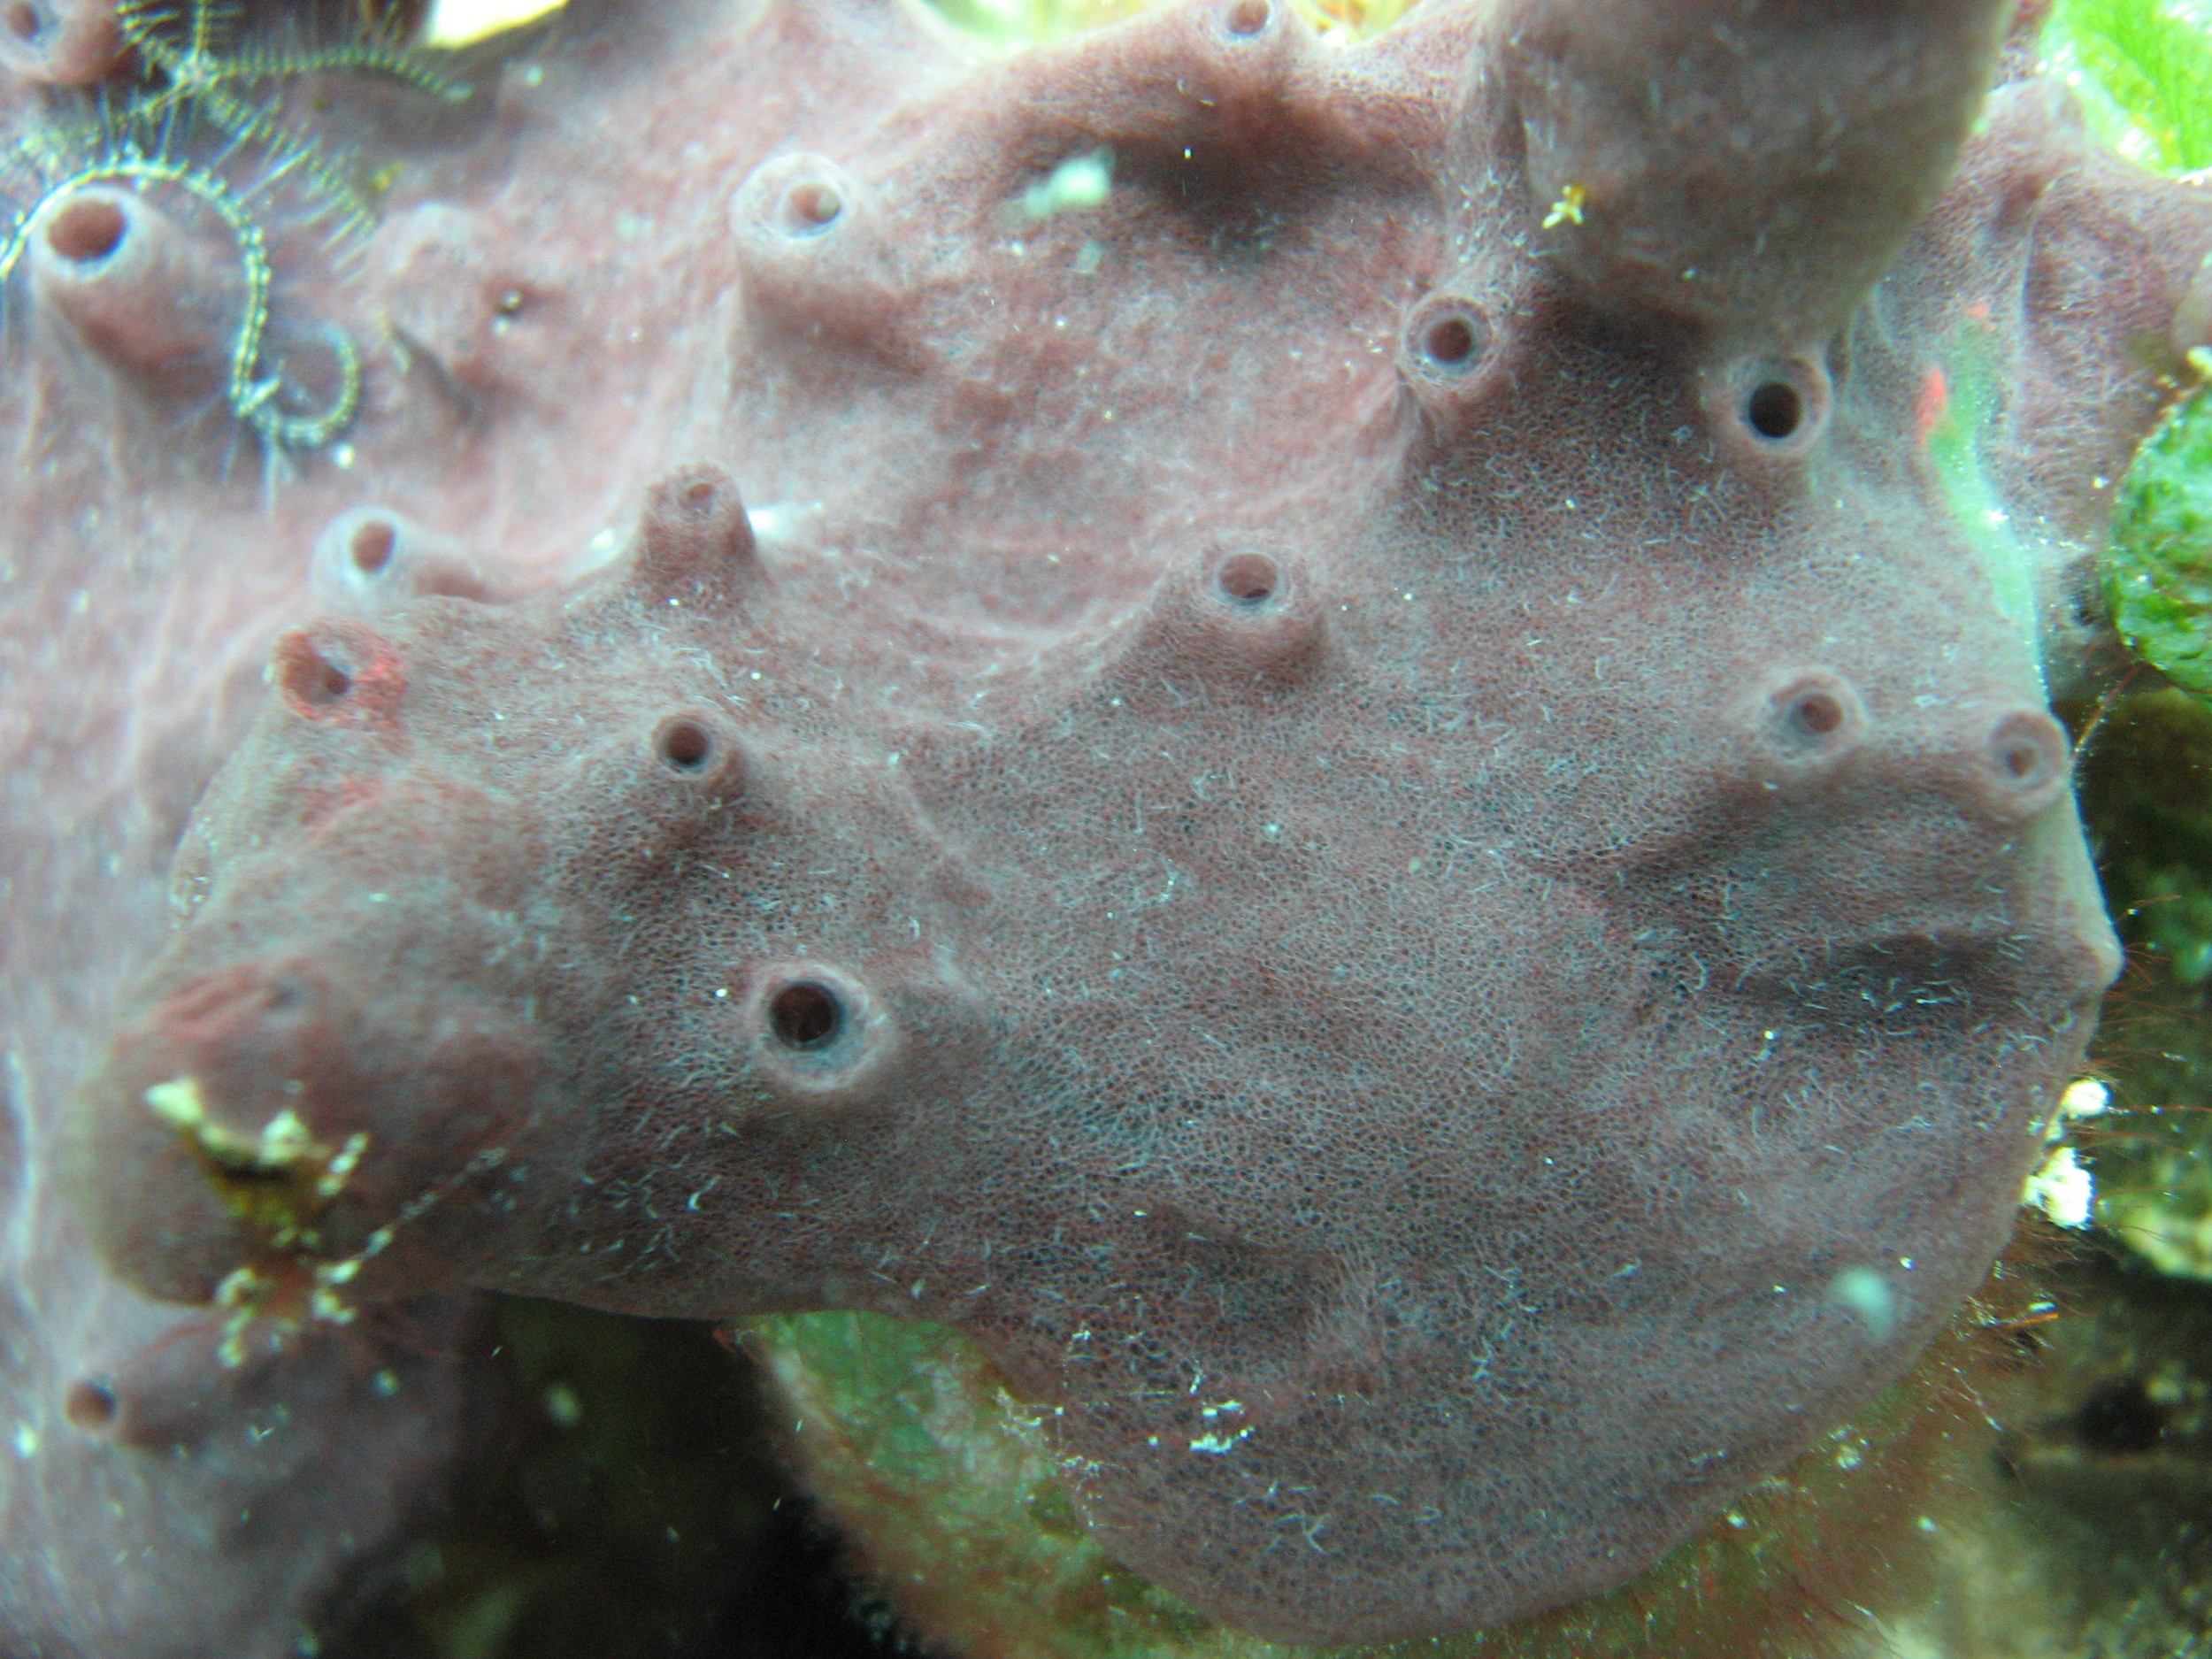   Xestospongia bocatorensis  in Bocas del Toro, Panama. This sponge hosts filamentous cyanobacteria 